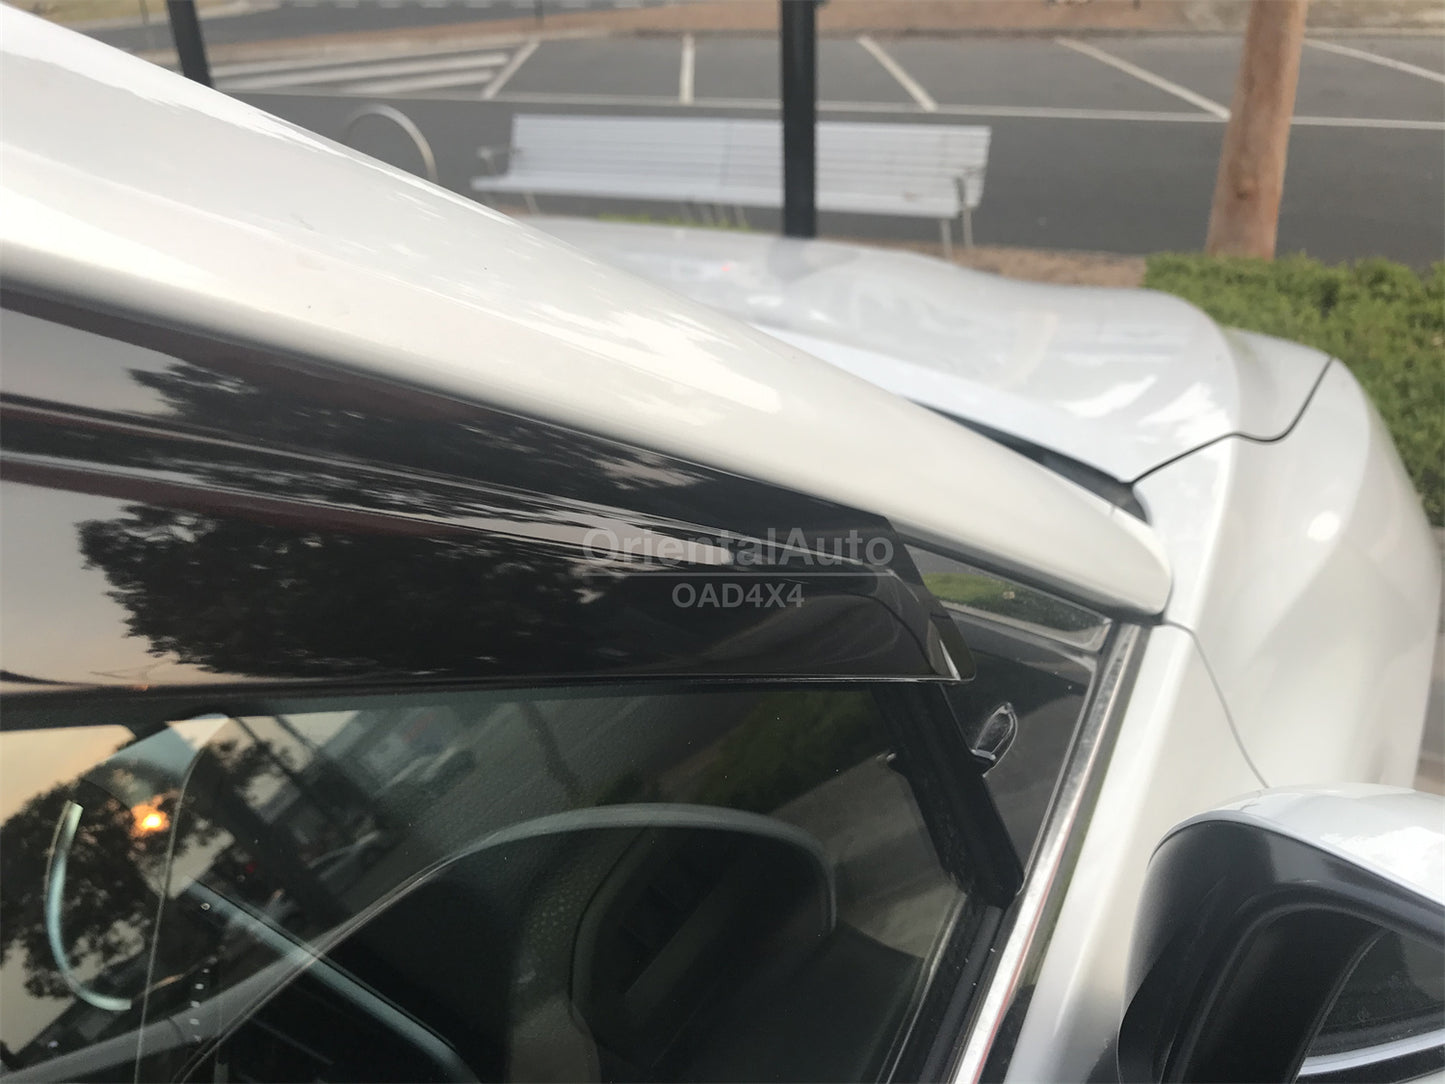 Injection Weathershields Weather Shields Window Visor For Toyota Camry 2017+